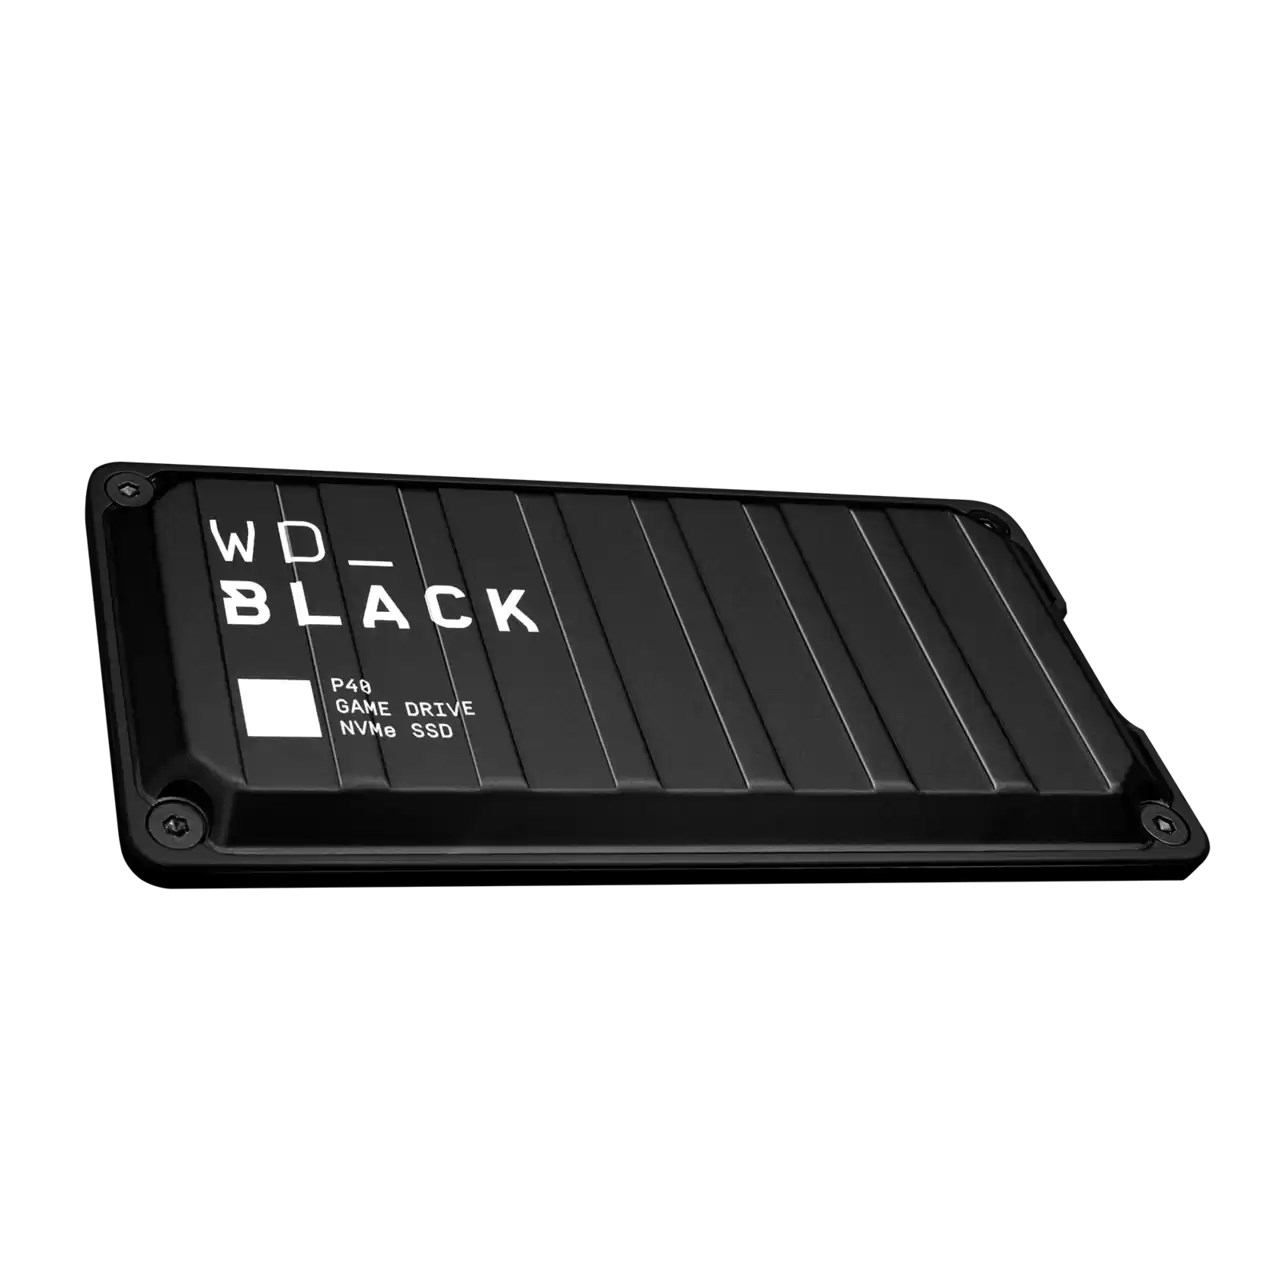 SanDisk externí SSD 1TB WD BLACK P40 Game Drive0 